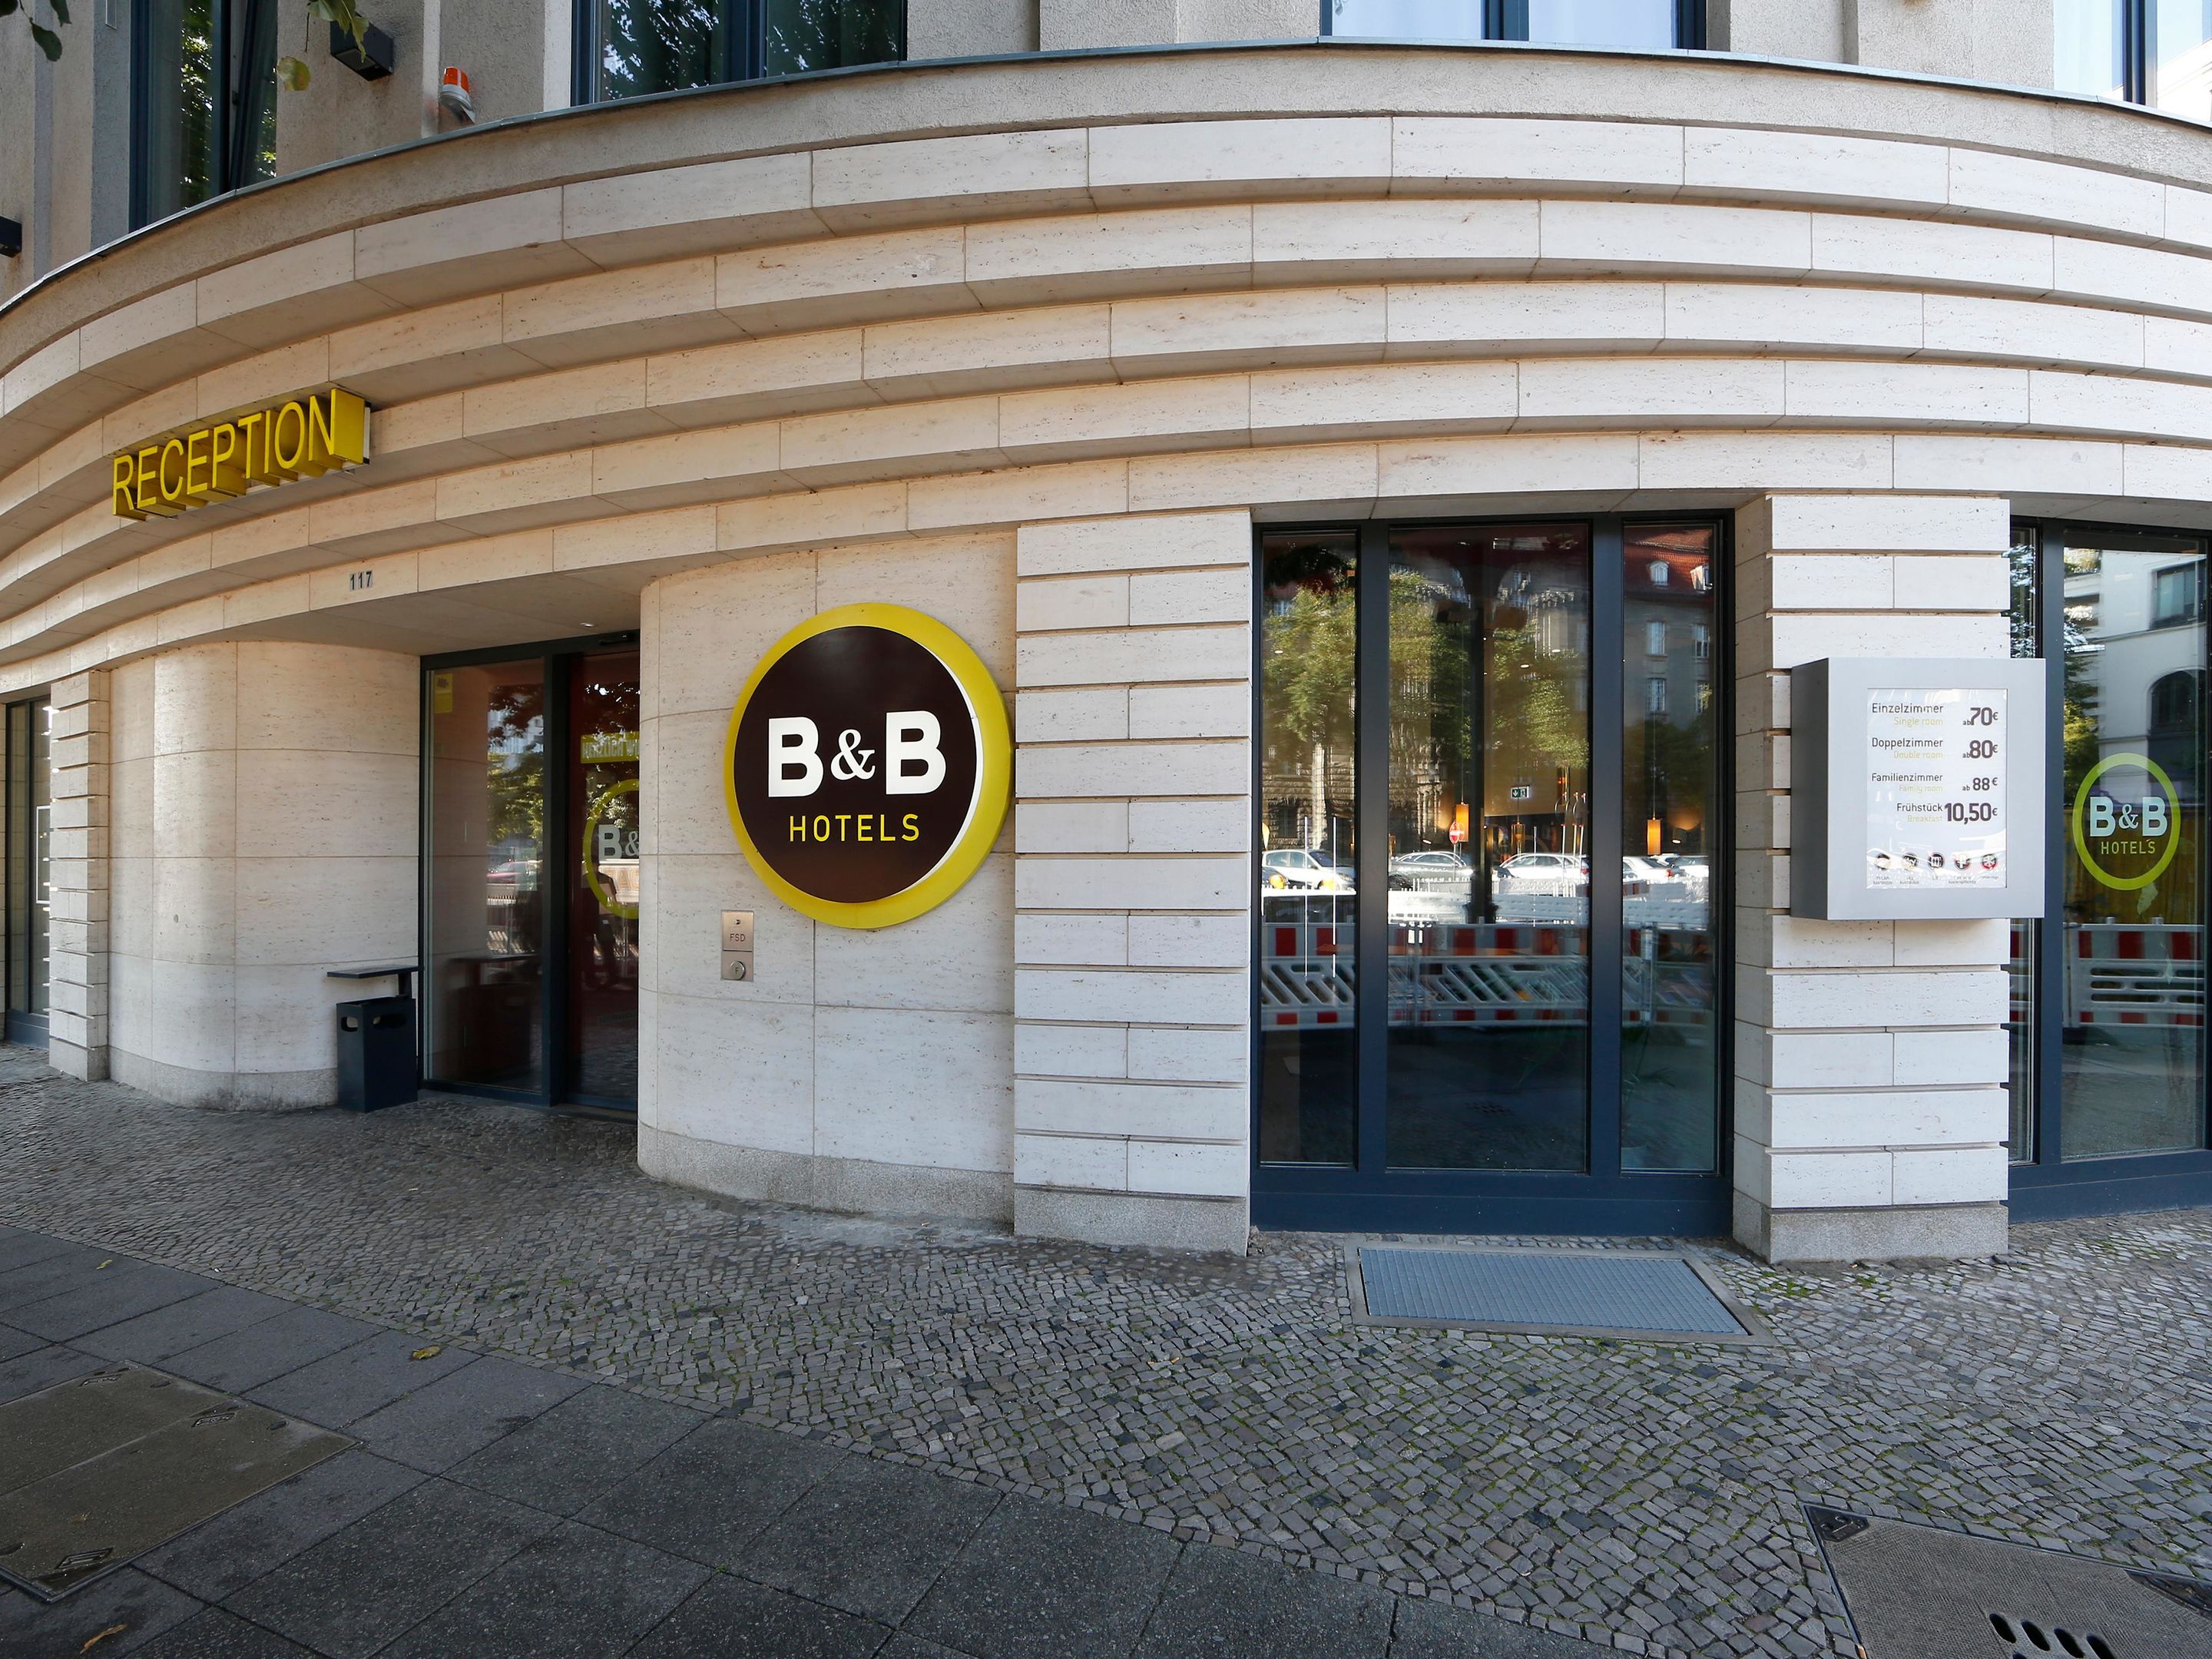 B&B HOTEL Berlin-Charlottenburg, Kaiserdamm 117 in Berlin